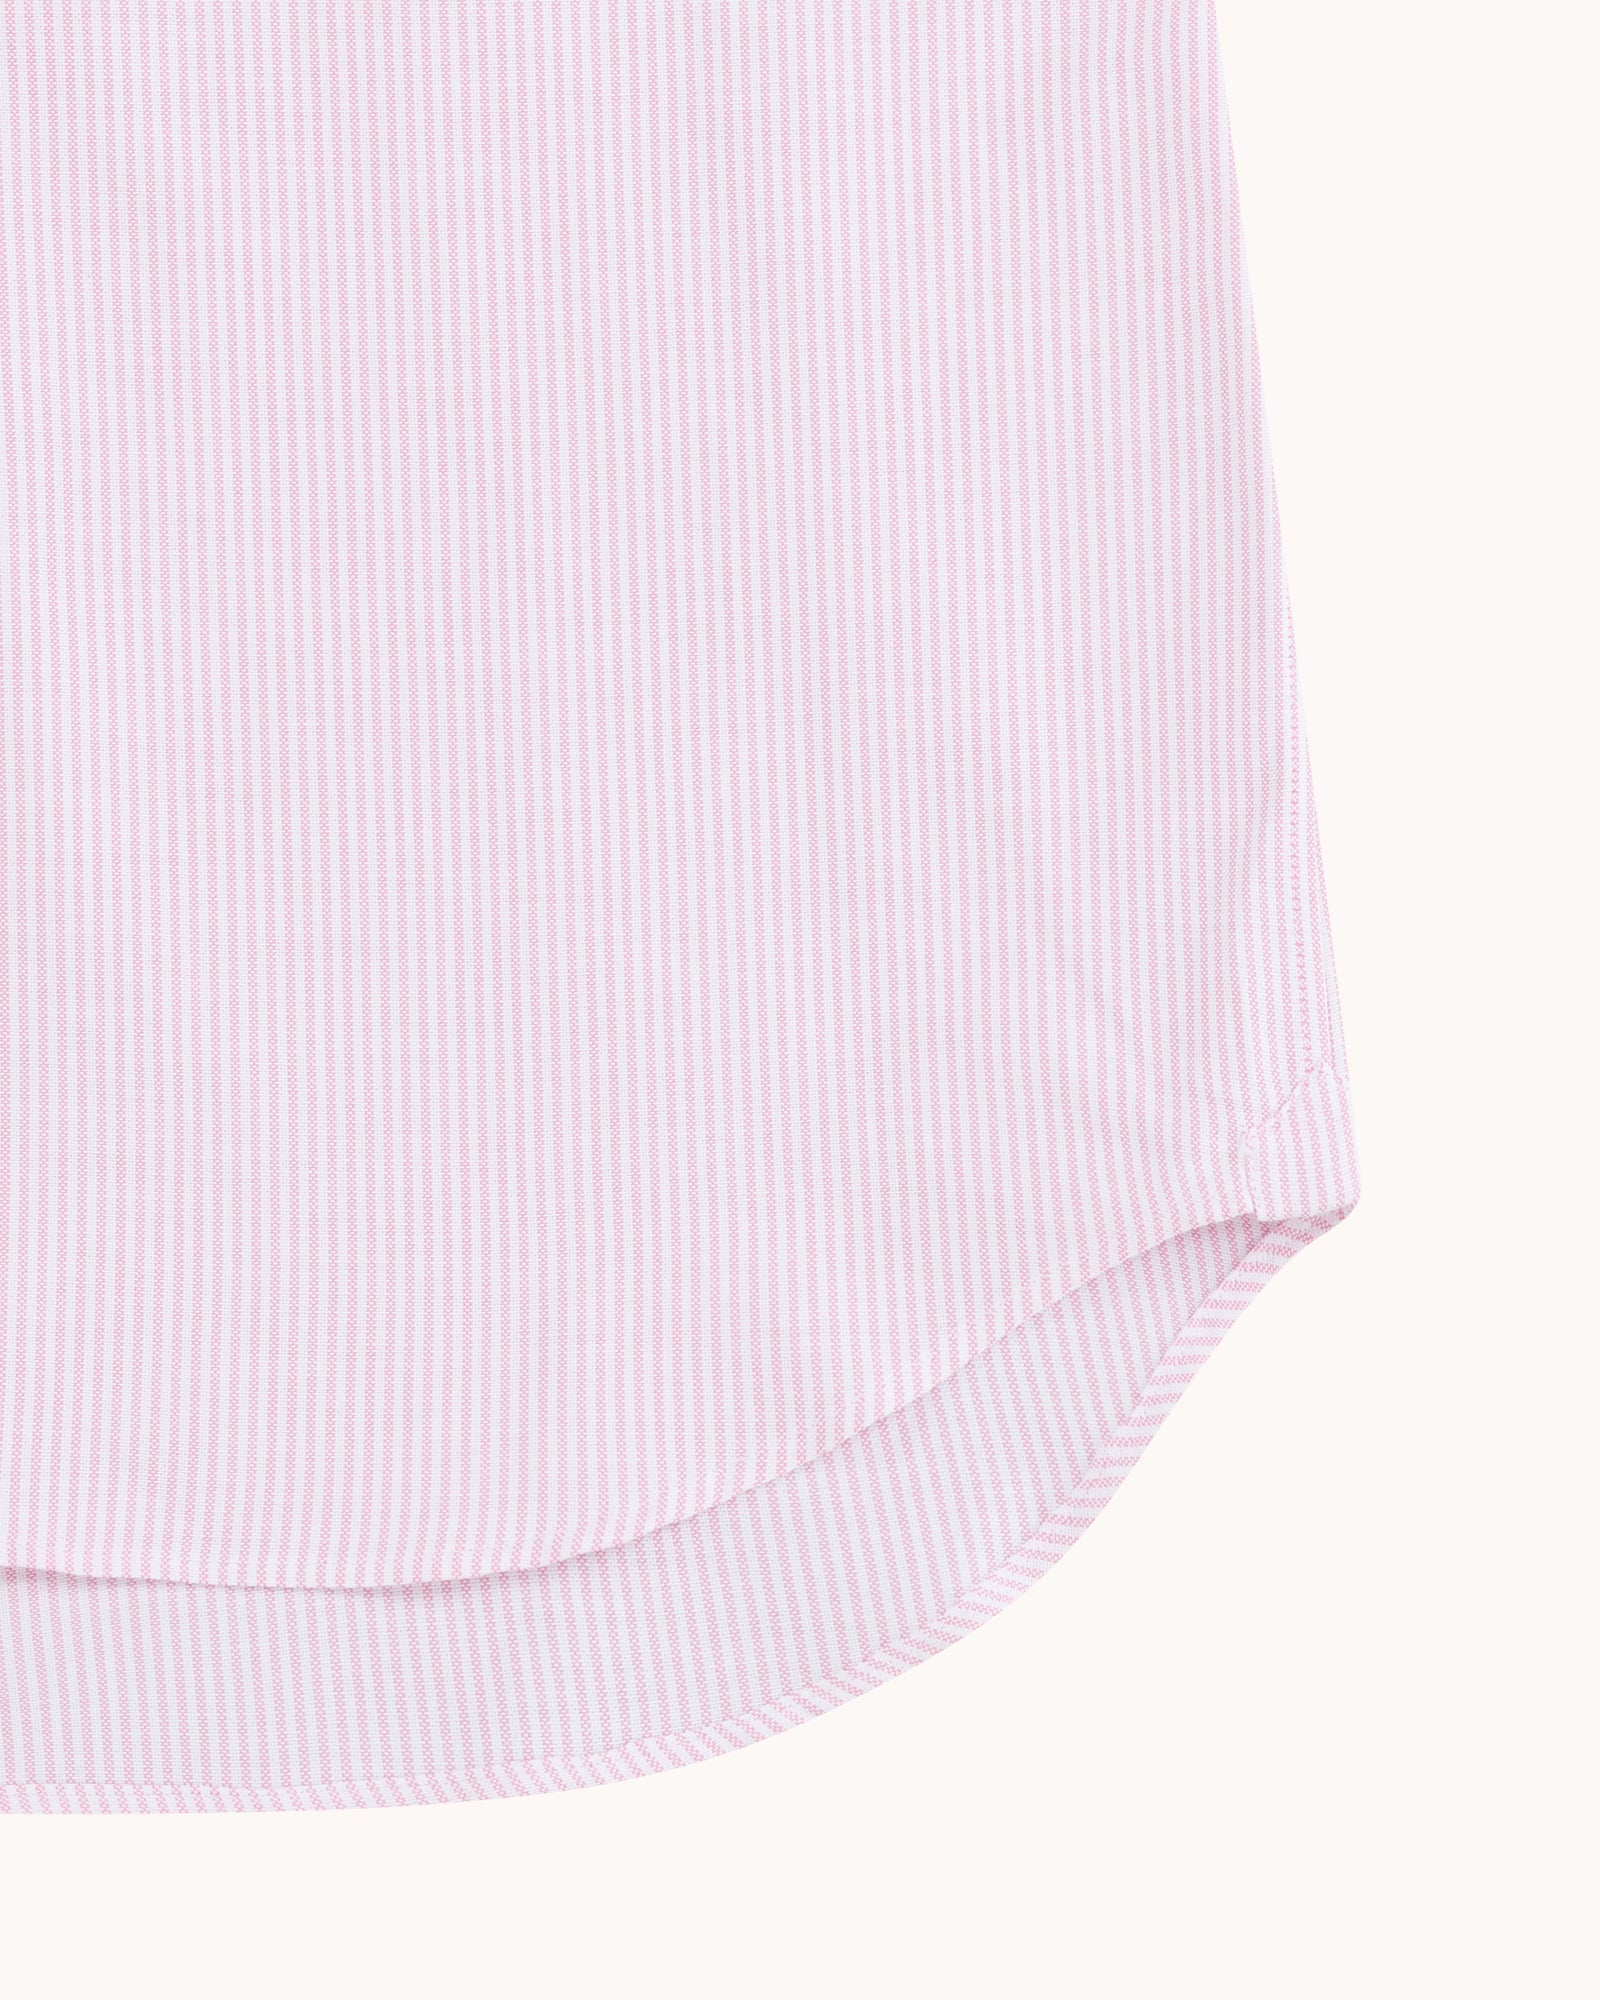 Button Down Collar Shirt - Pink Stripe Oxford Cotton